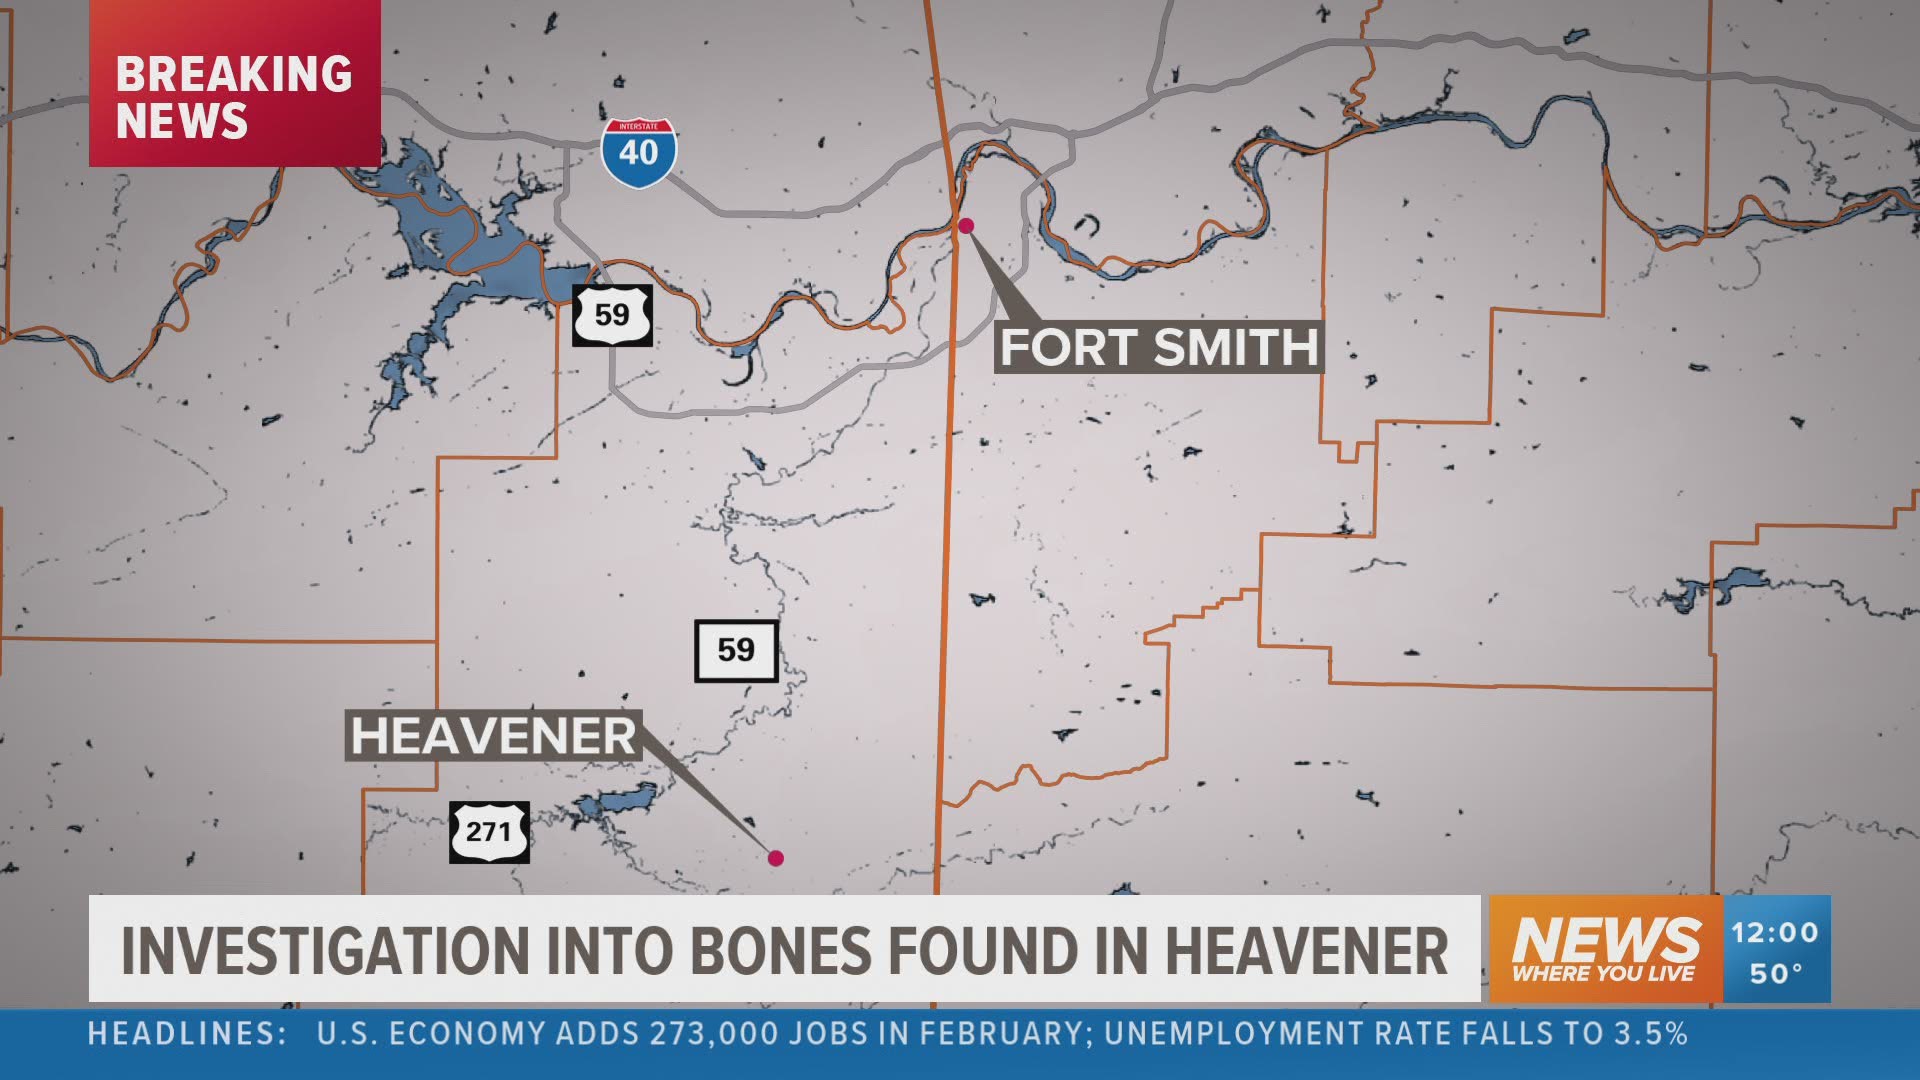 Human remains found in Heavener